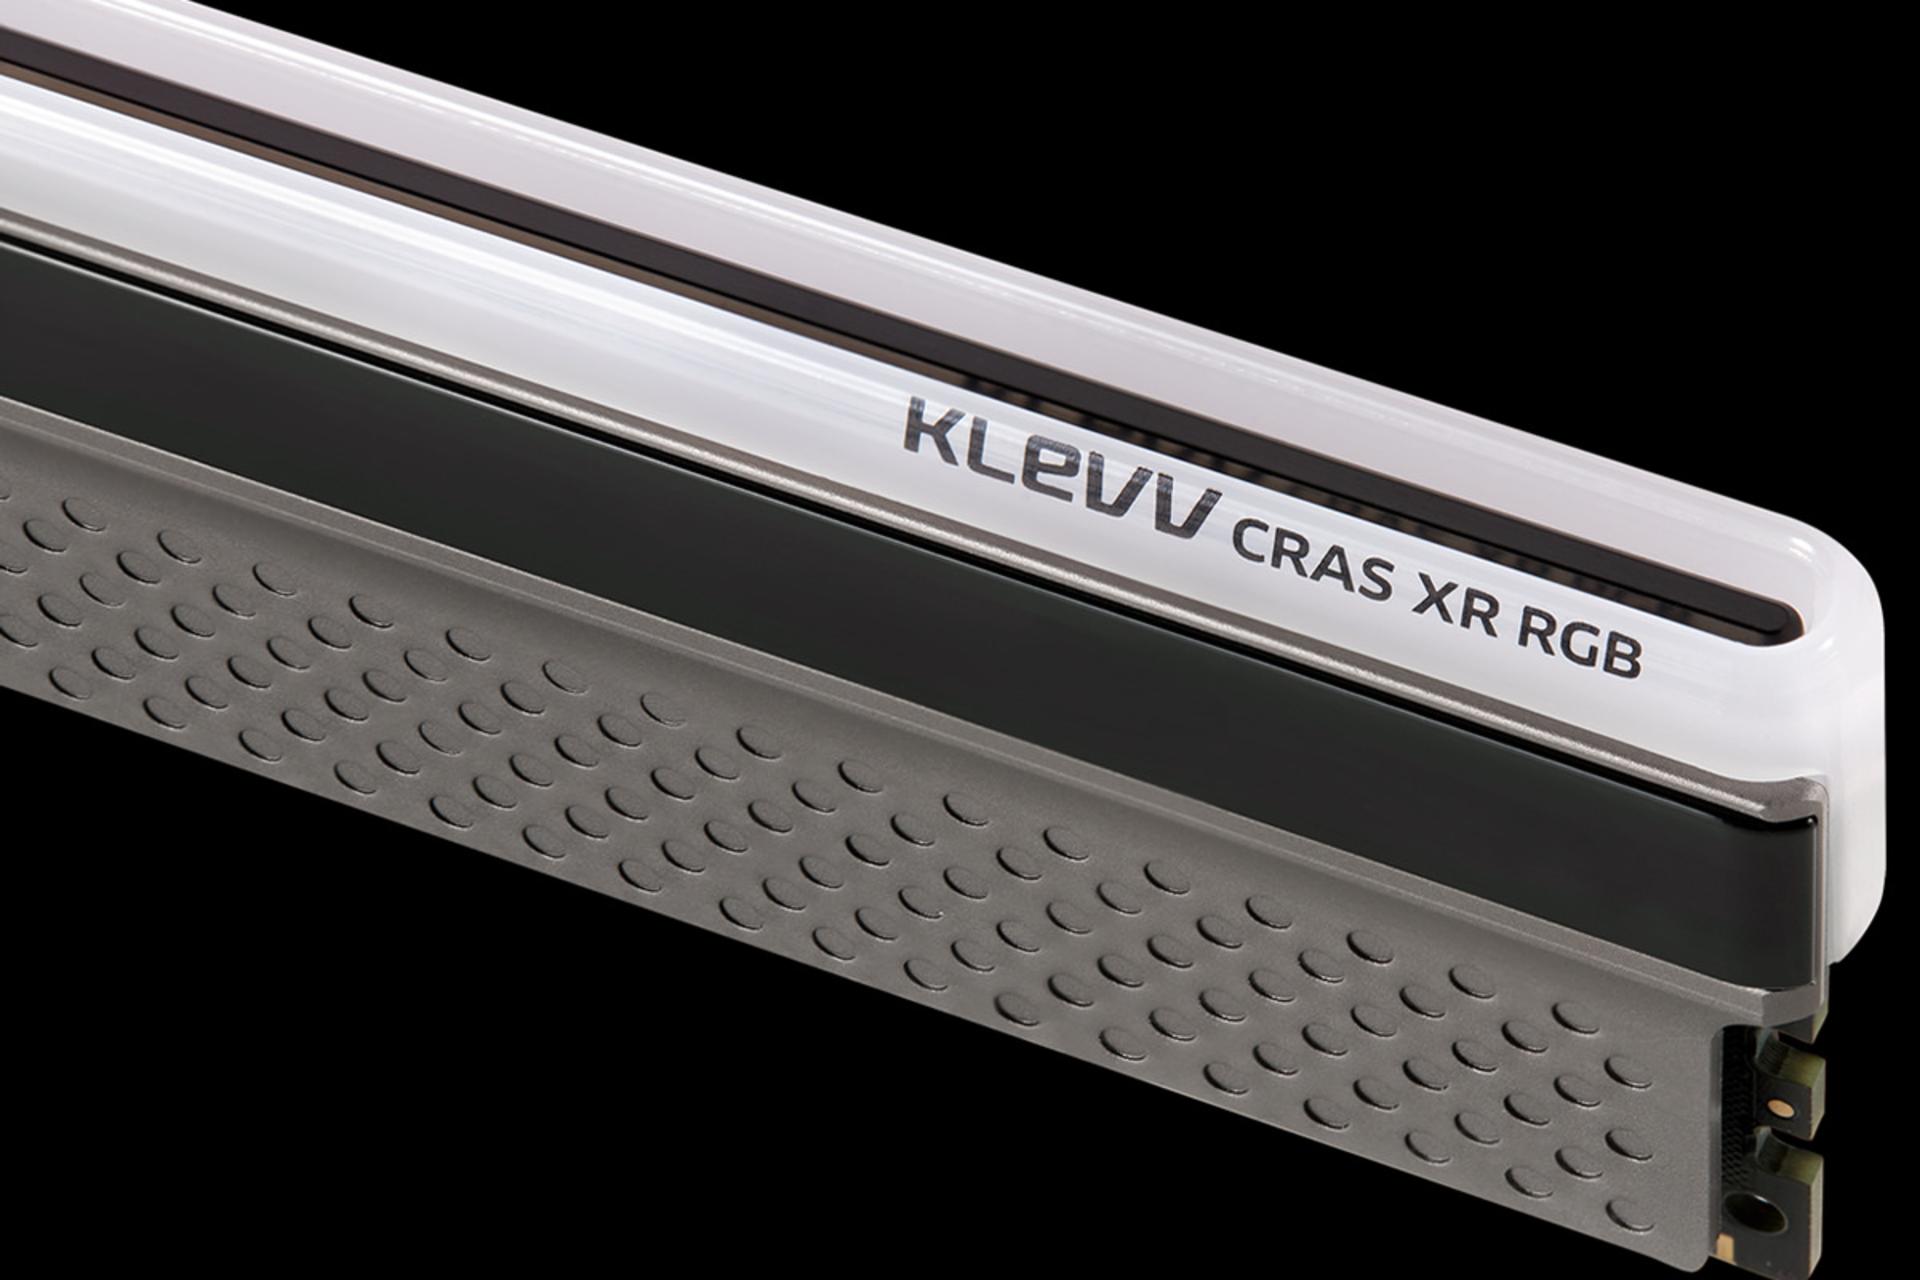 klevv Cras XR RGB ظرفیت 32 گیگابایت (2x16) از نوع DDR4-4000 نمای جانبی 4